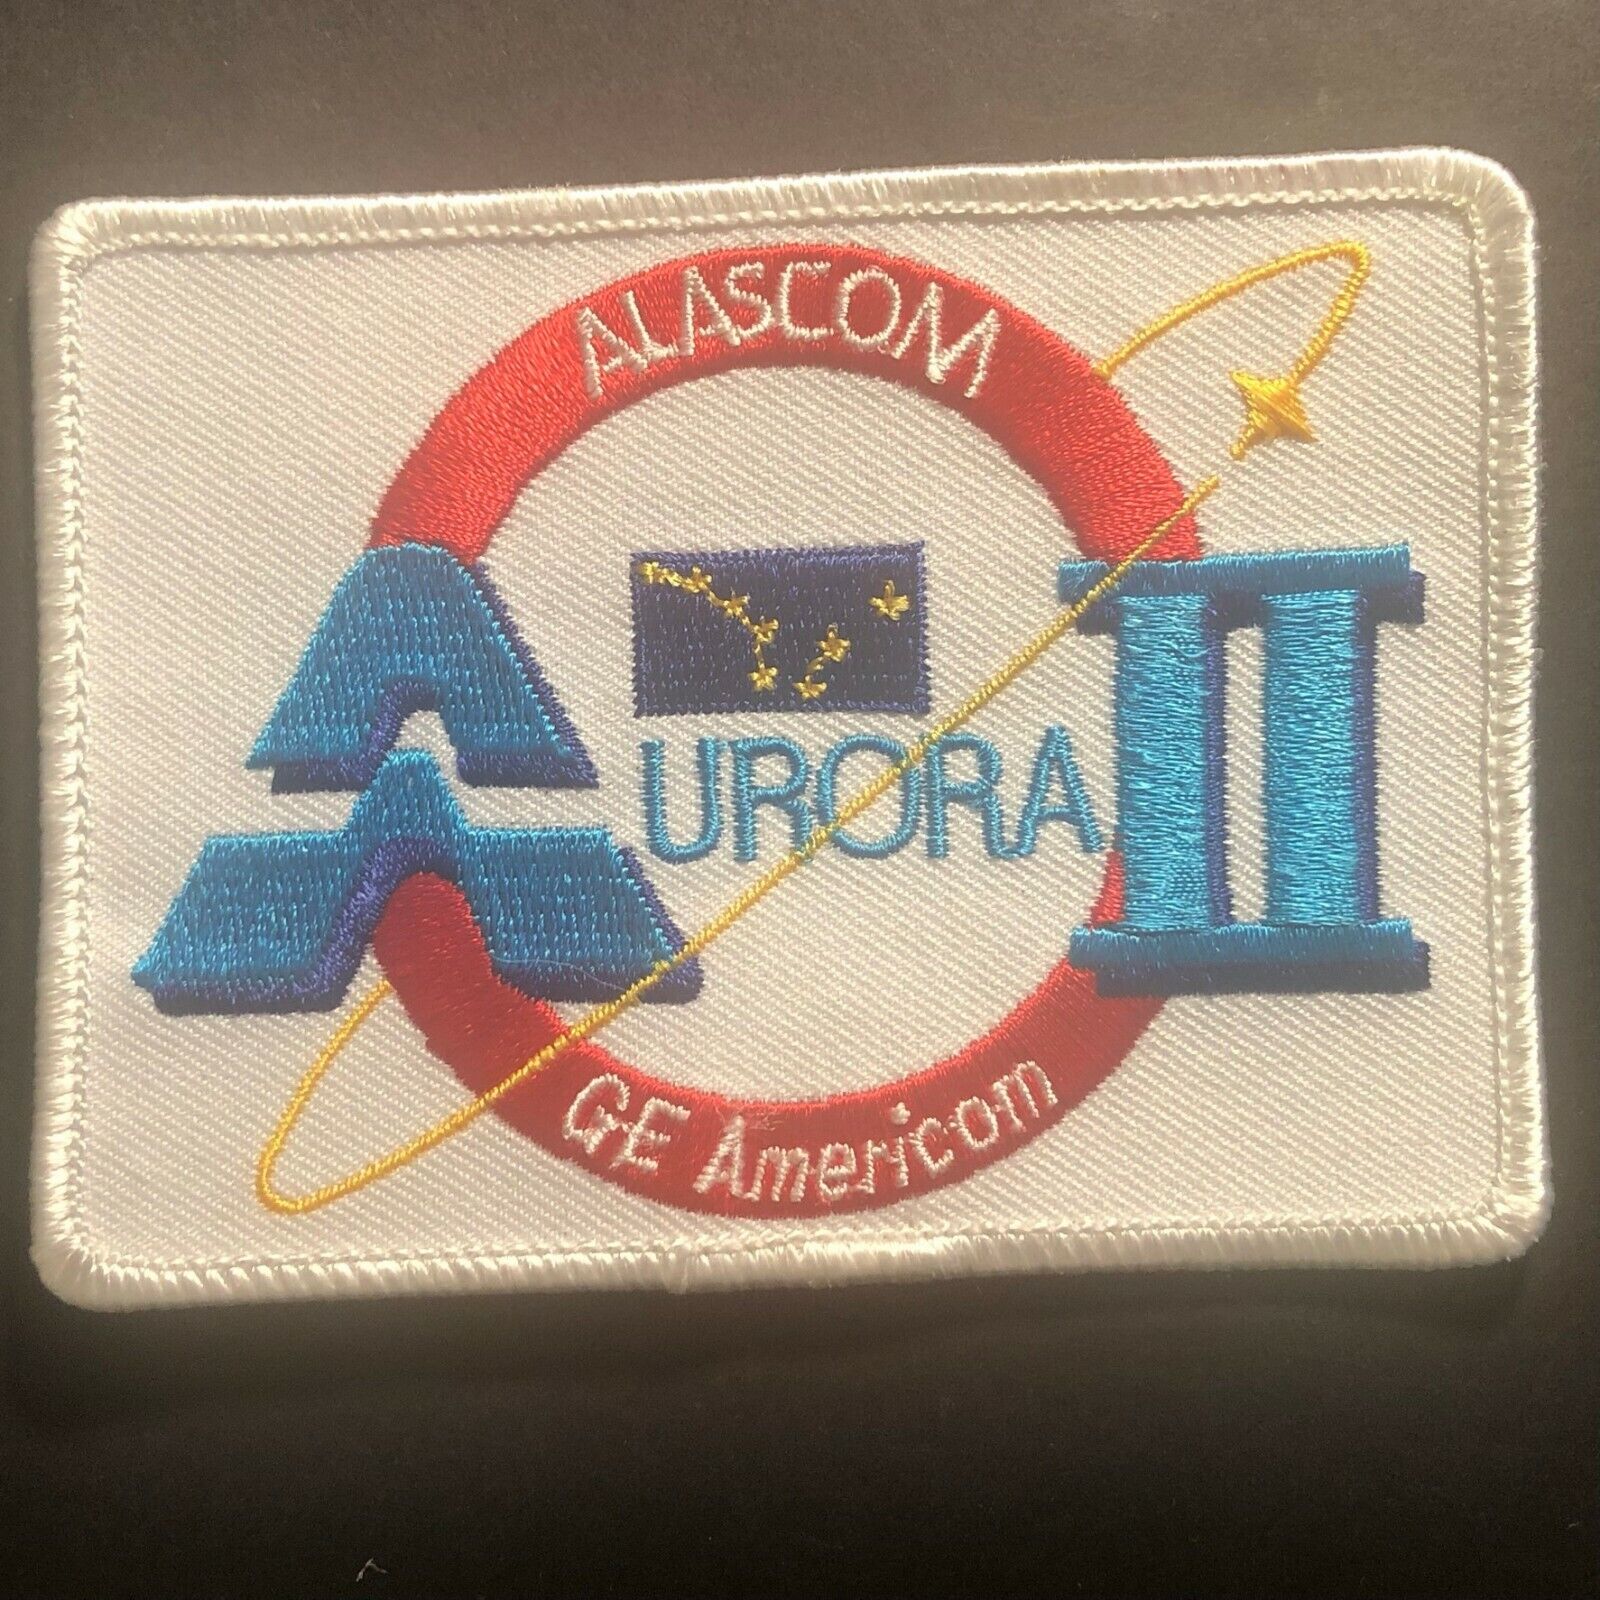 Vintage NASA Alascom Aurora II GE Americom Embroidered Patch 